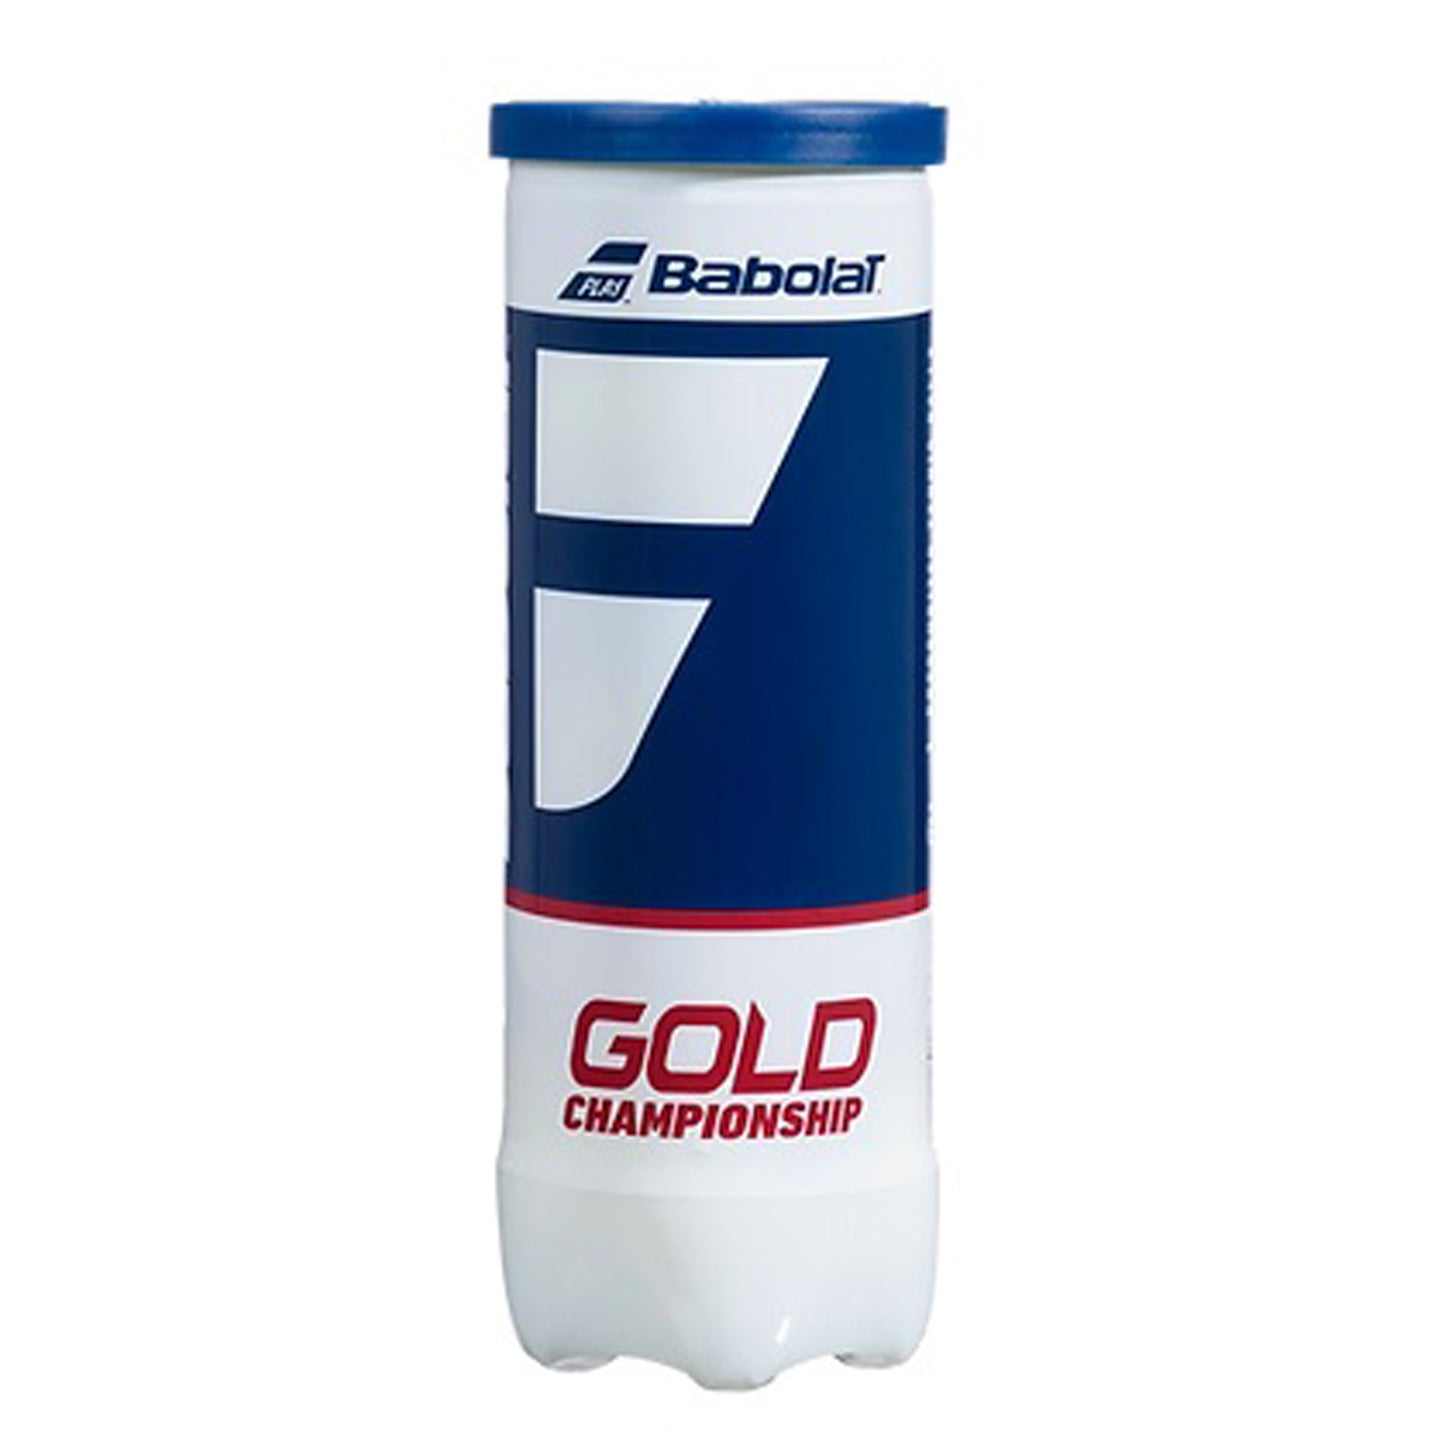 Babolat Gold Championship X3 Tennis Balls Dozen (4 Cans) - Best Price online Prokicksports.com